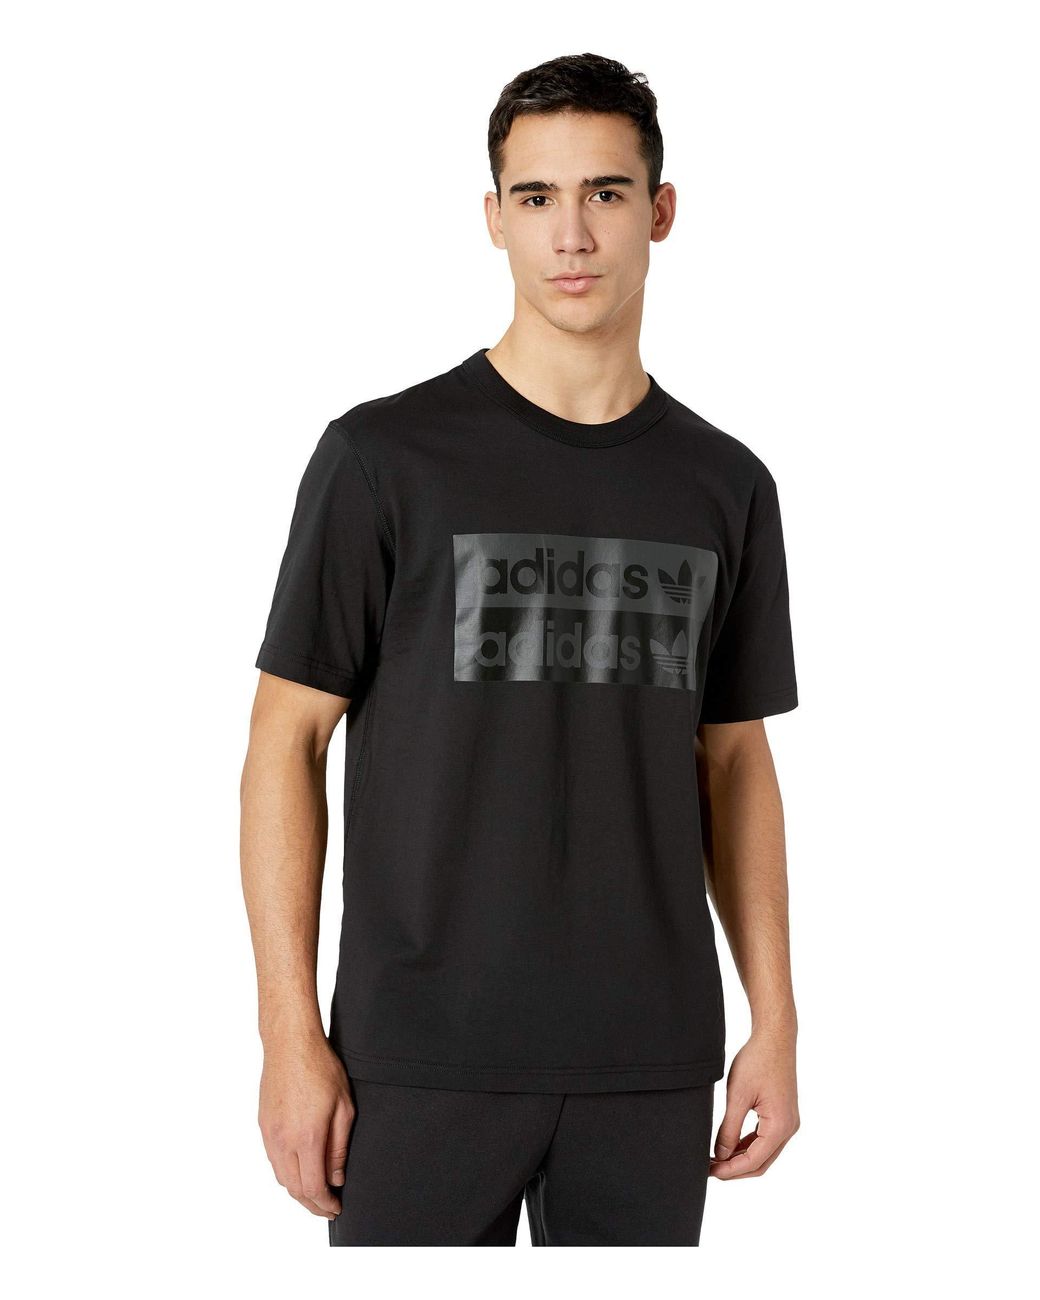 adidas Originals T-shirt in Black for Men - Lyst